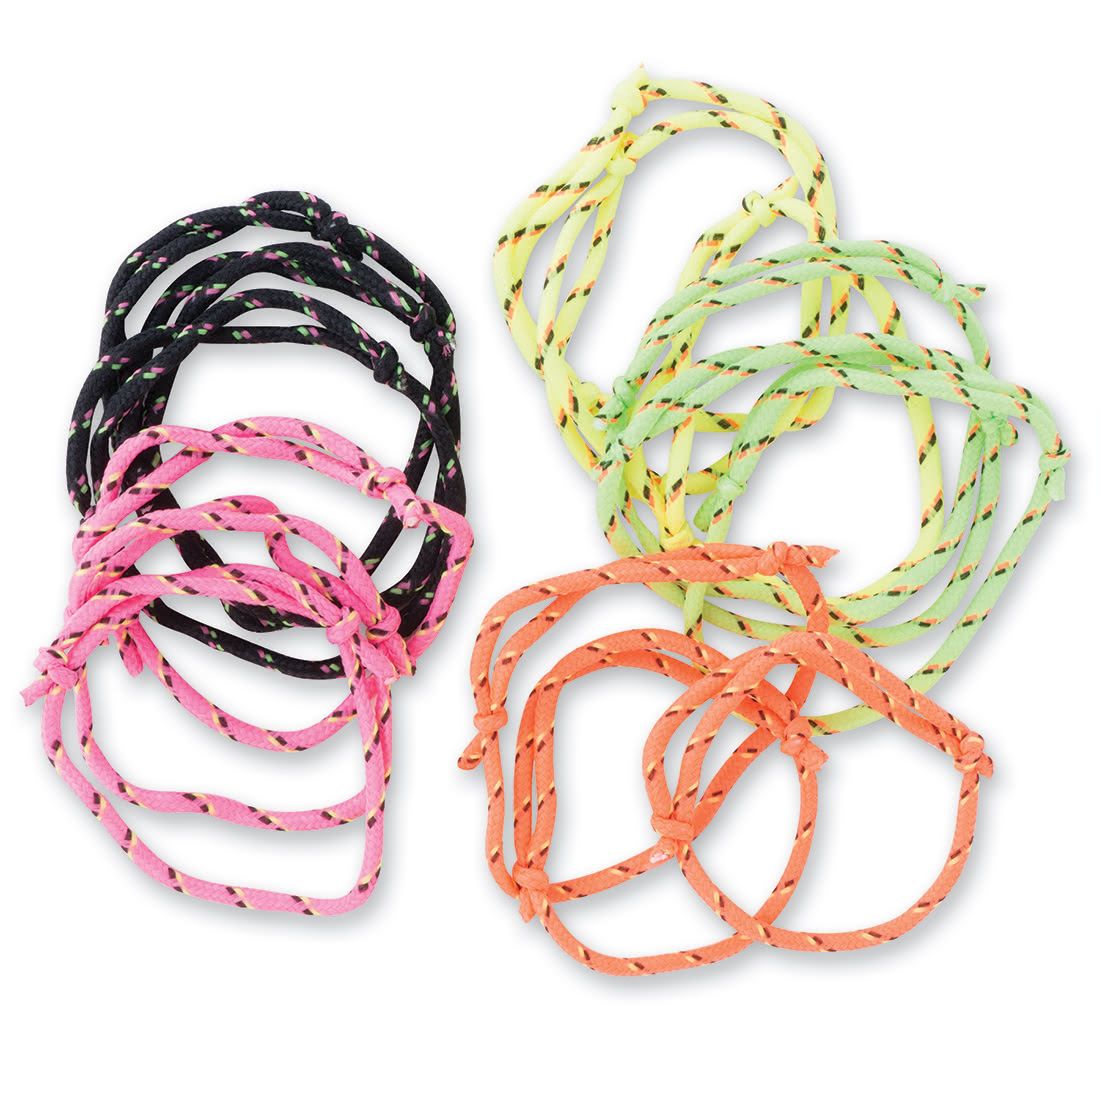 SmileMakers Braided Elastic Bracelets - 24 per Pack